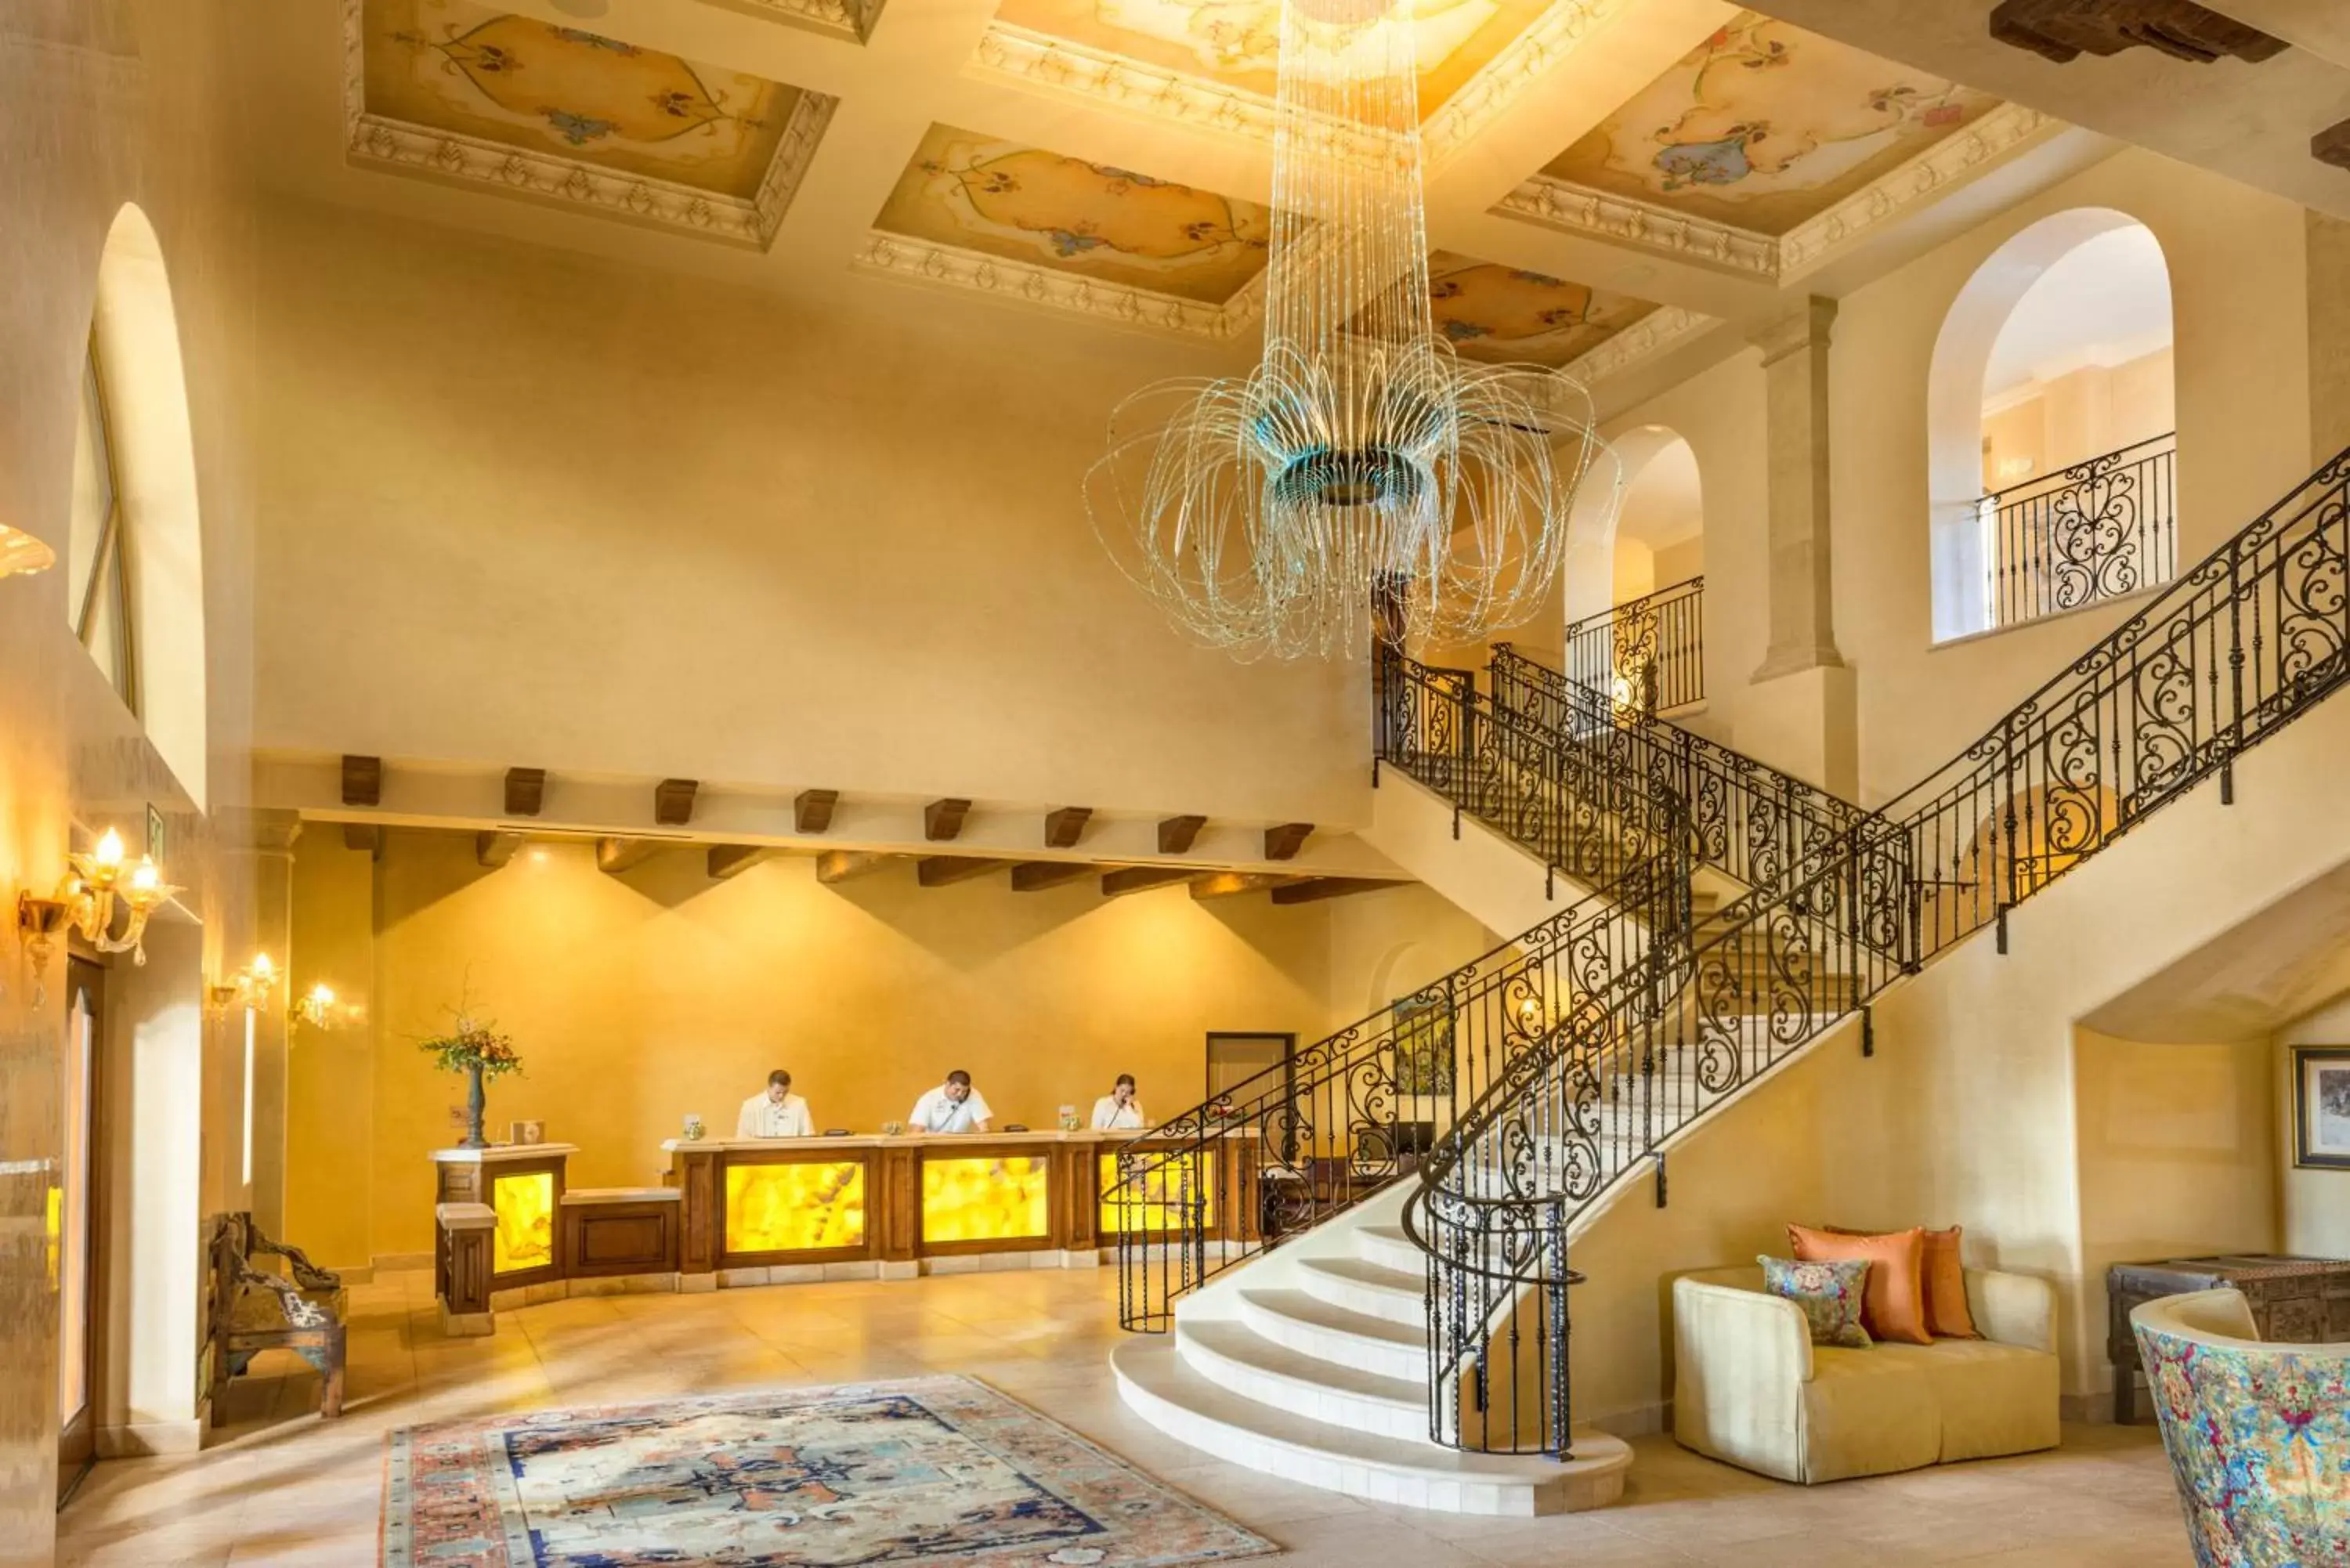 Lobby or reception in Allegretto Vineyard Resort Paso Robles